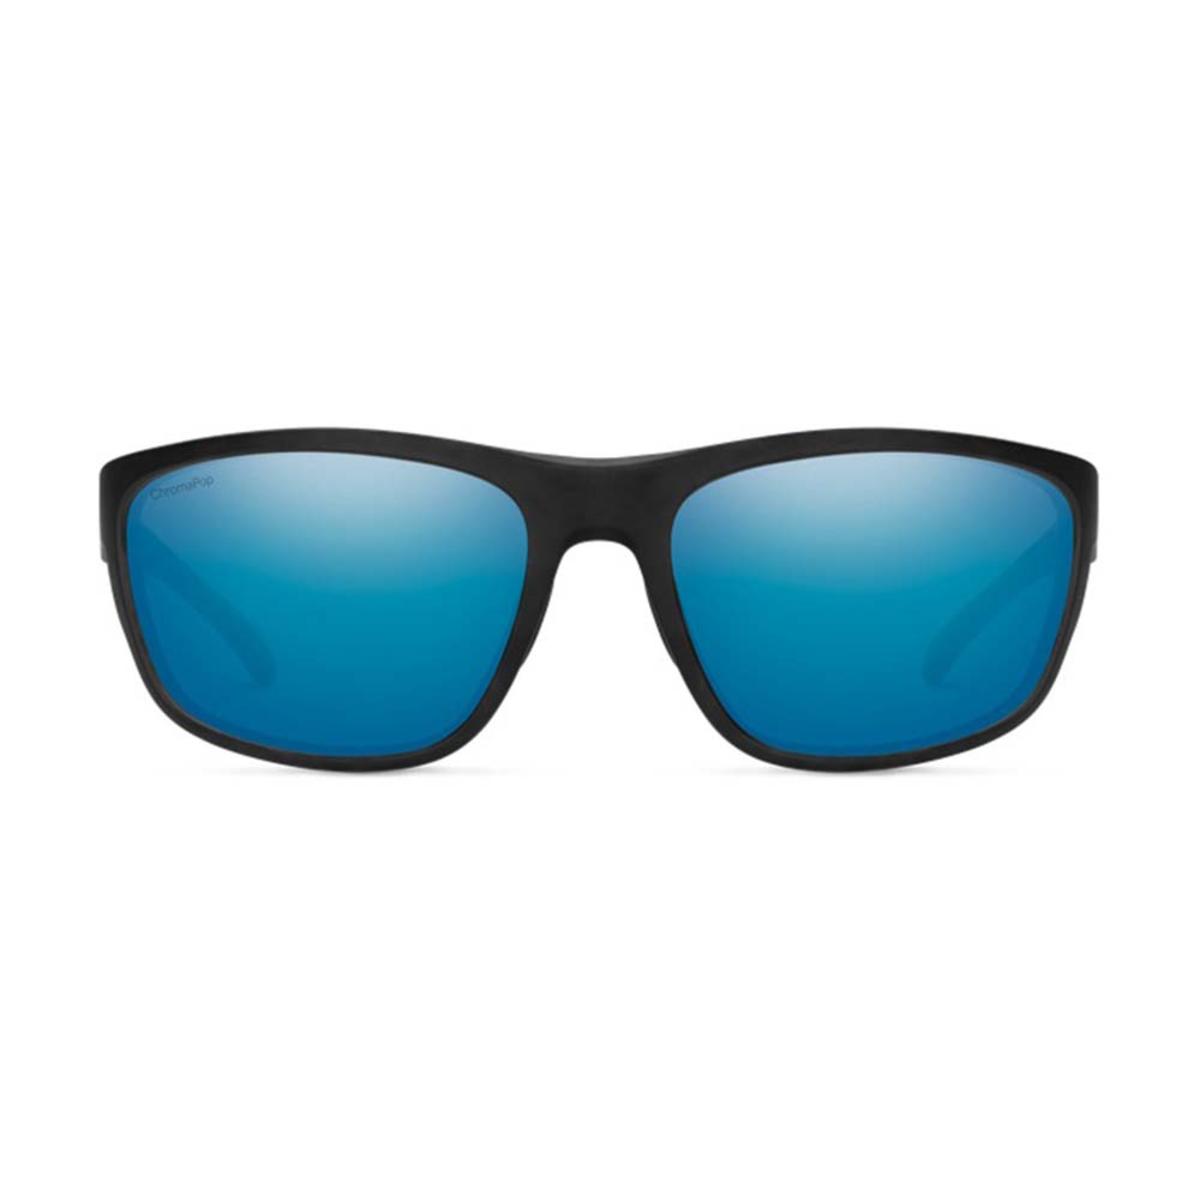 Smith Optics Redding Sunglasses ChromaPop Glass Polarized Blue Mirror - Matte Black Frame